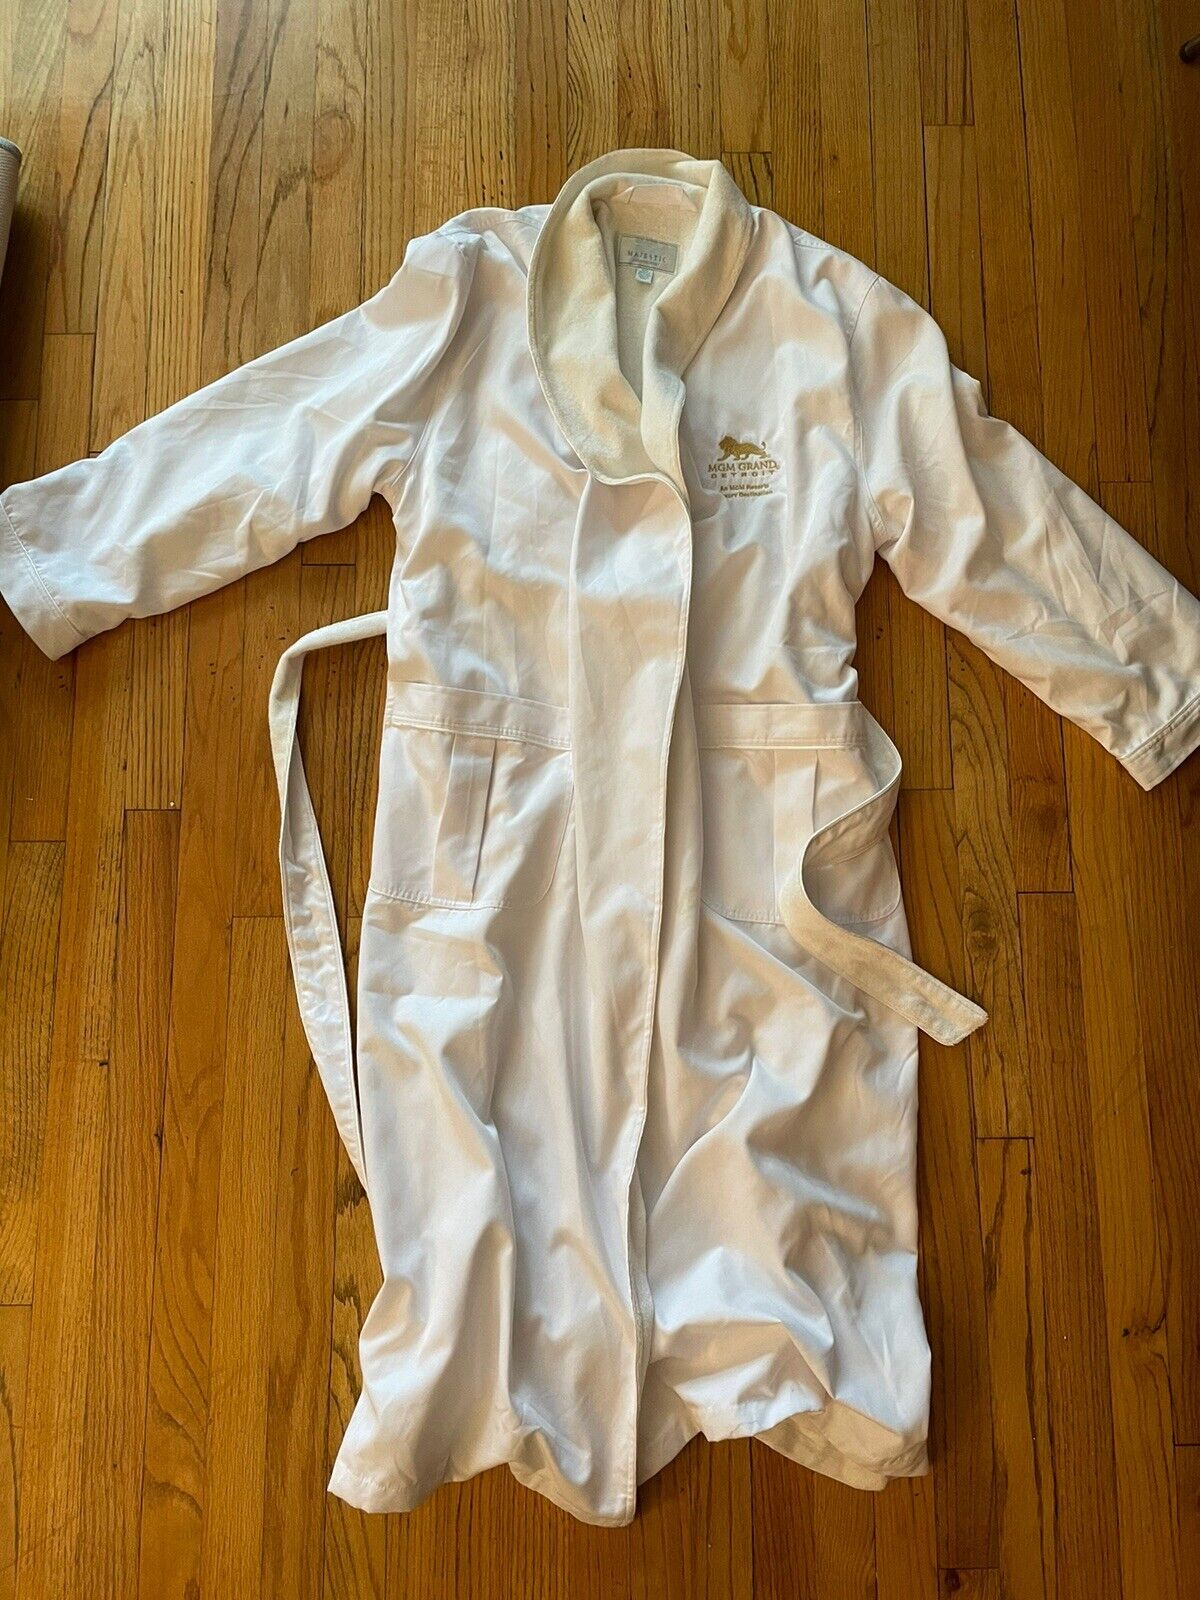 MGM Grand Detroit Resorts international White Spa Robe Plush Soft One Size